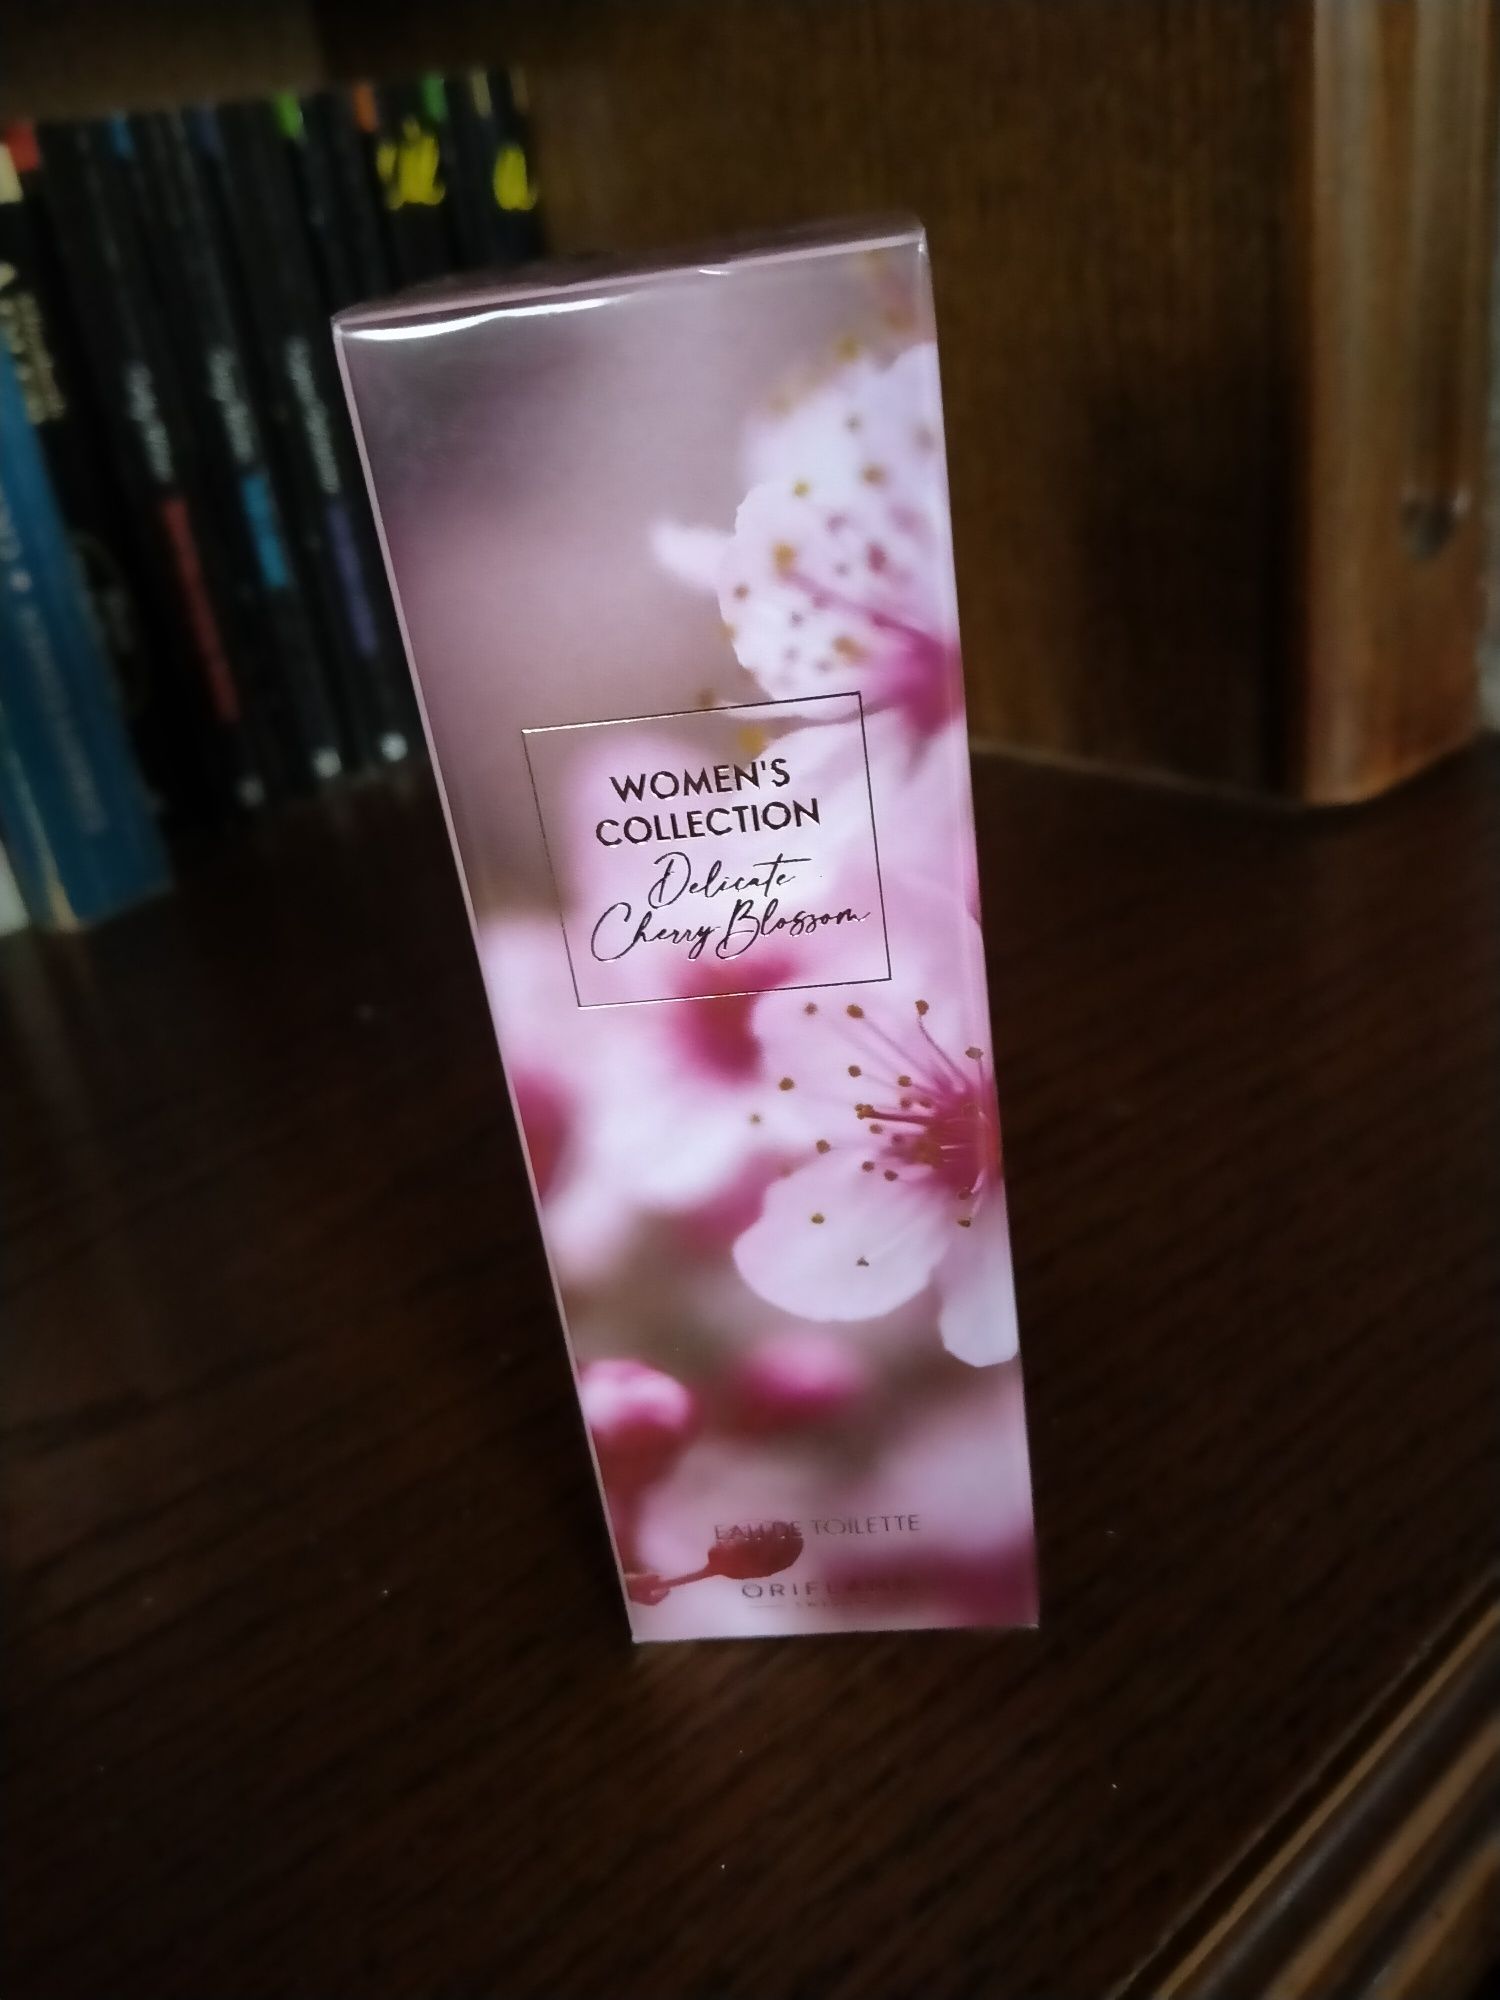 Piękne perfumy o zapachu słodkiej wiśni.